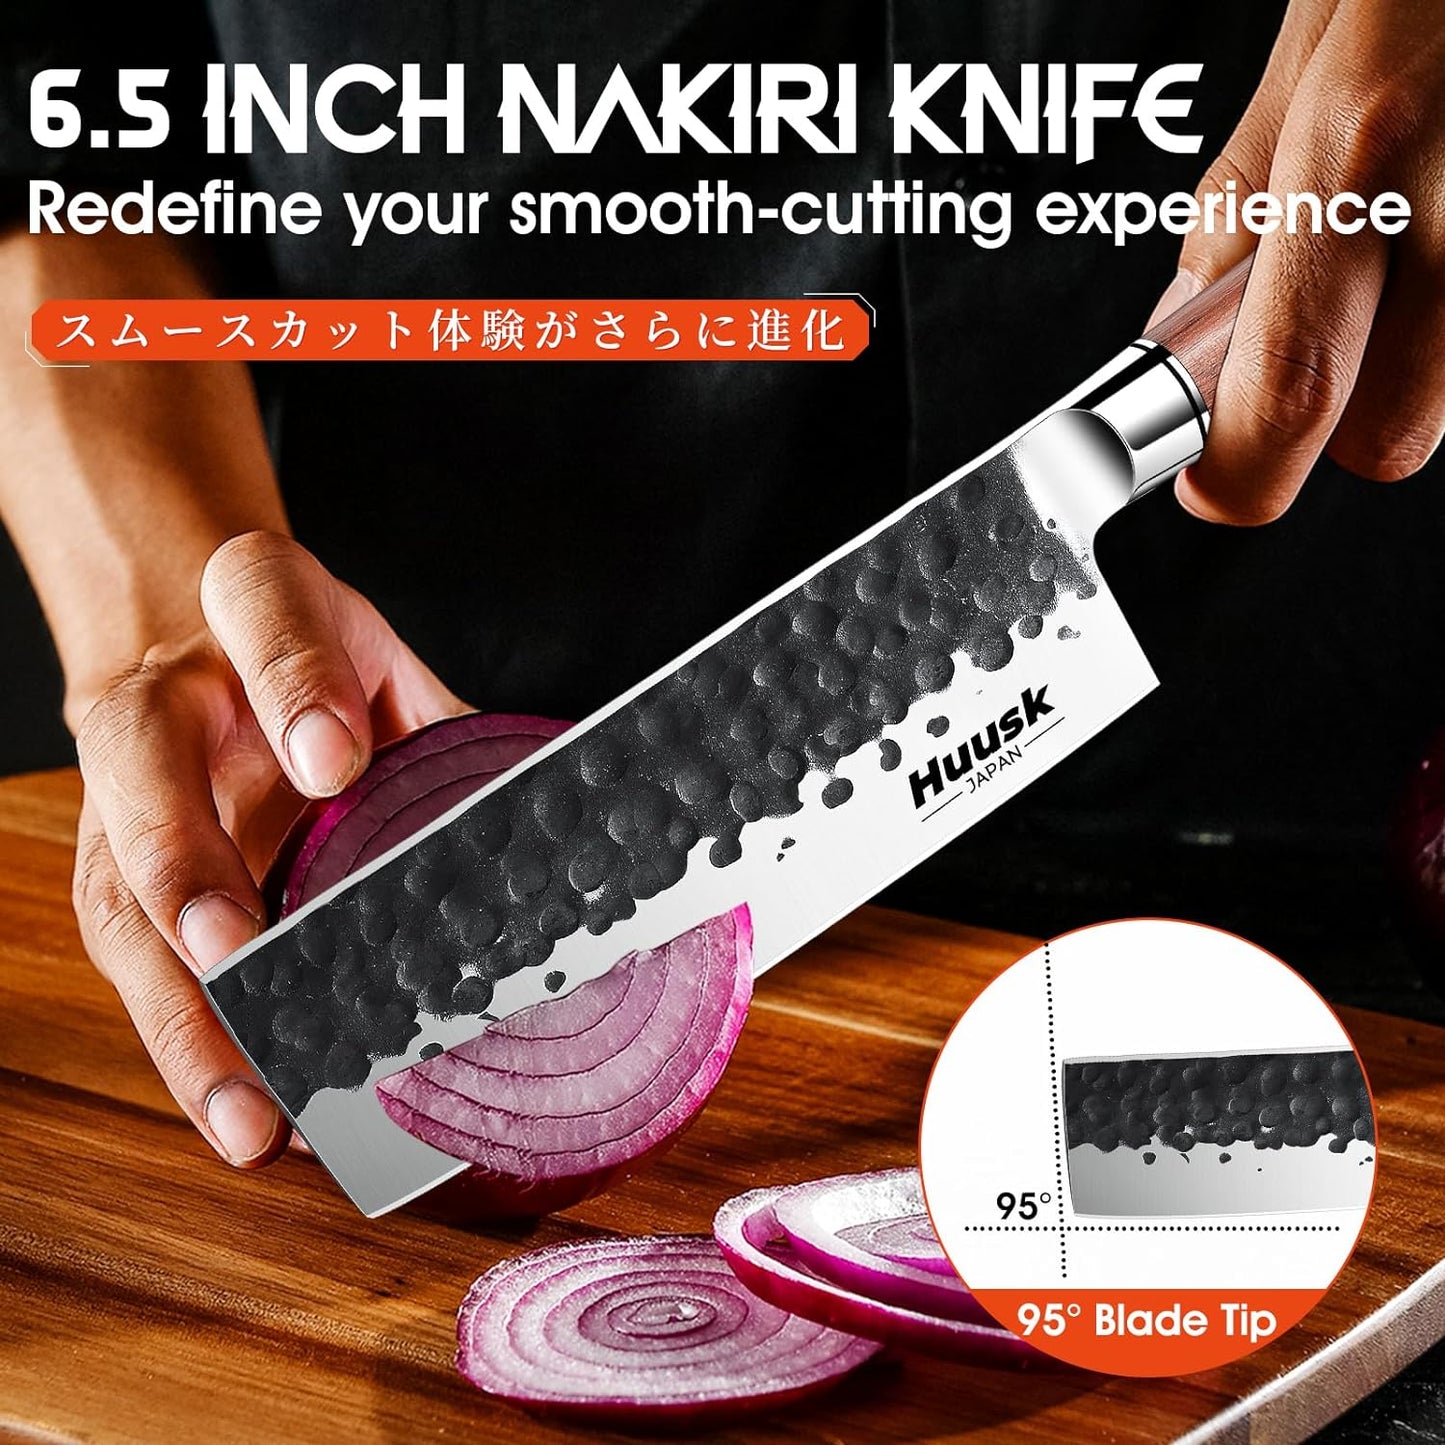 KD Japanese Nakiri Chef Knife, 6.5" Vegetable Chopping Knife with Gift Box